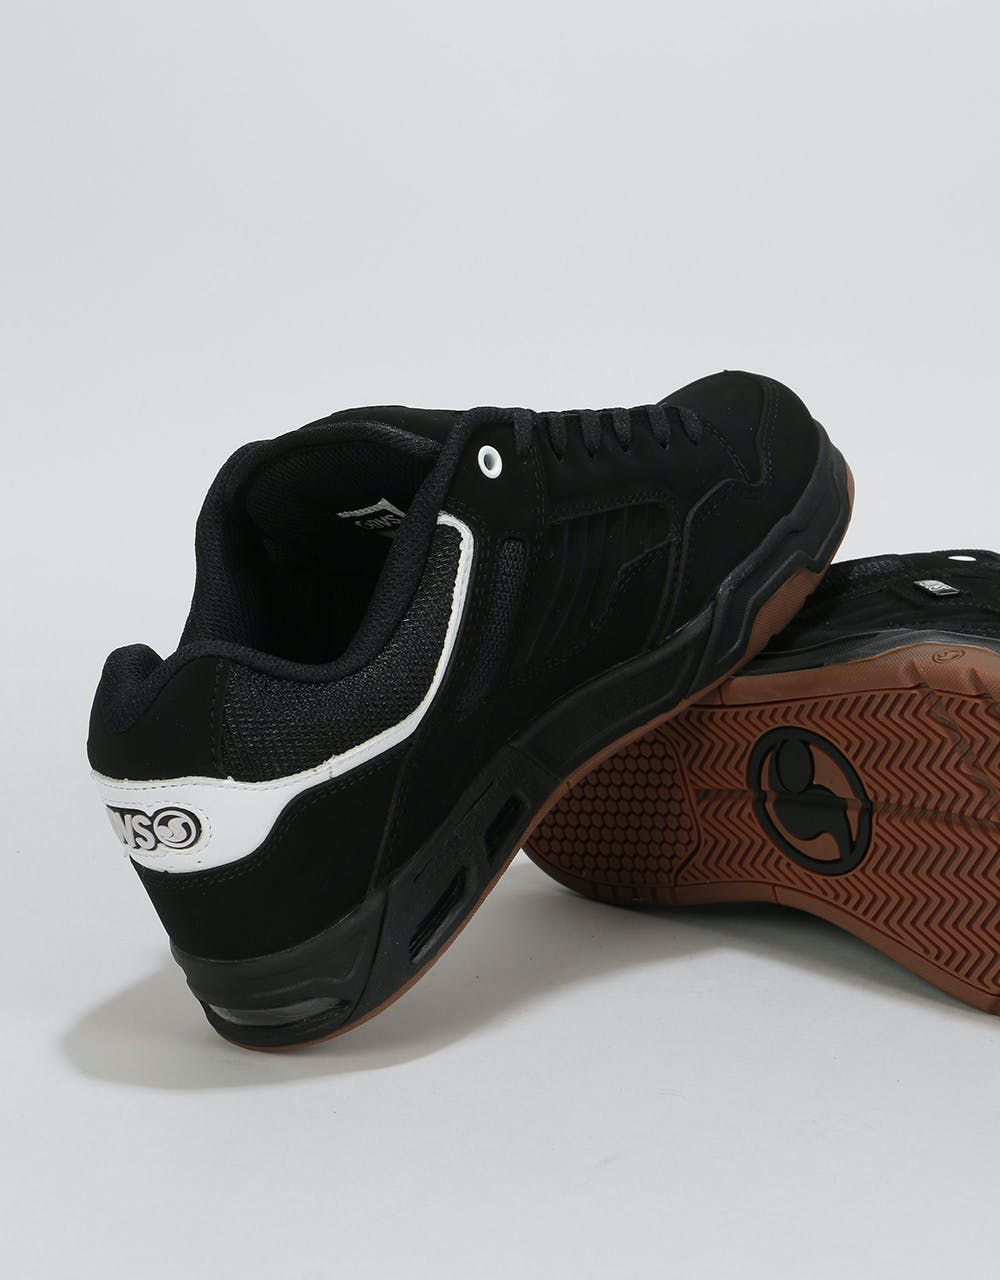 DVS Enduro Heir Skate Shoes - Black/White/Black Nubuck